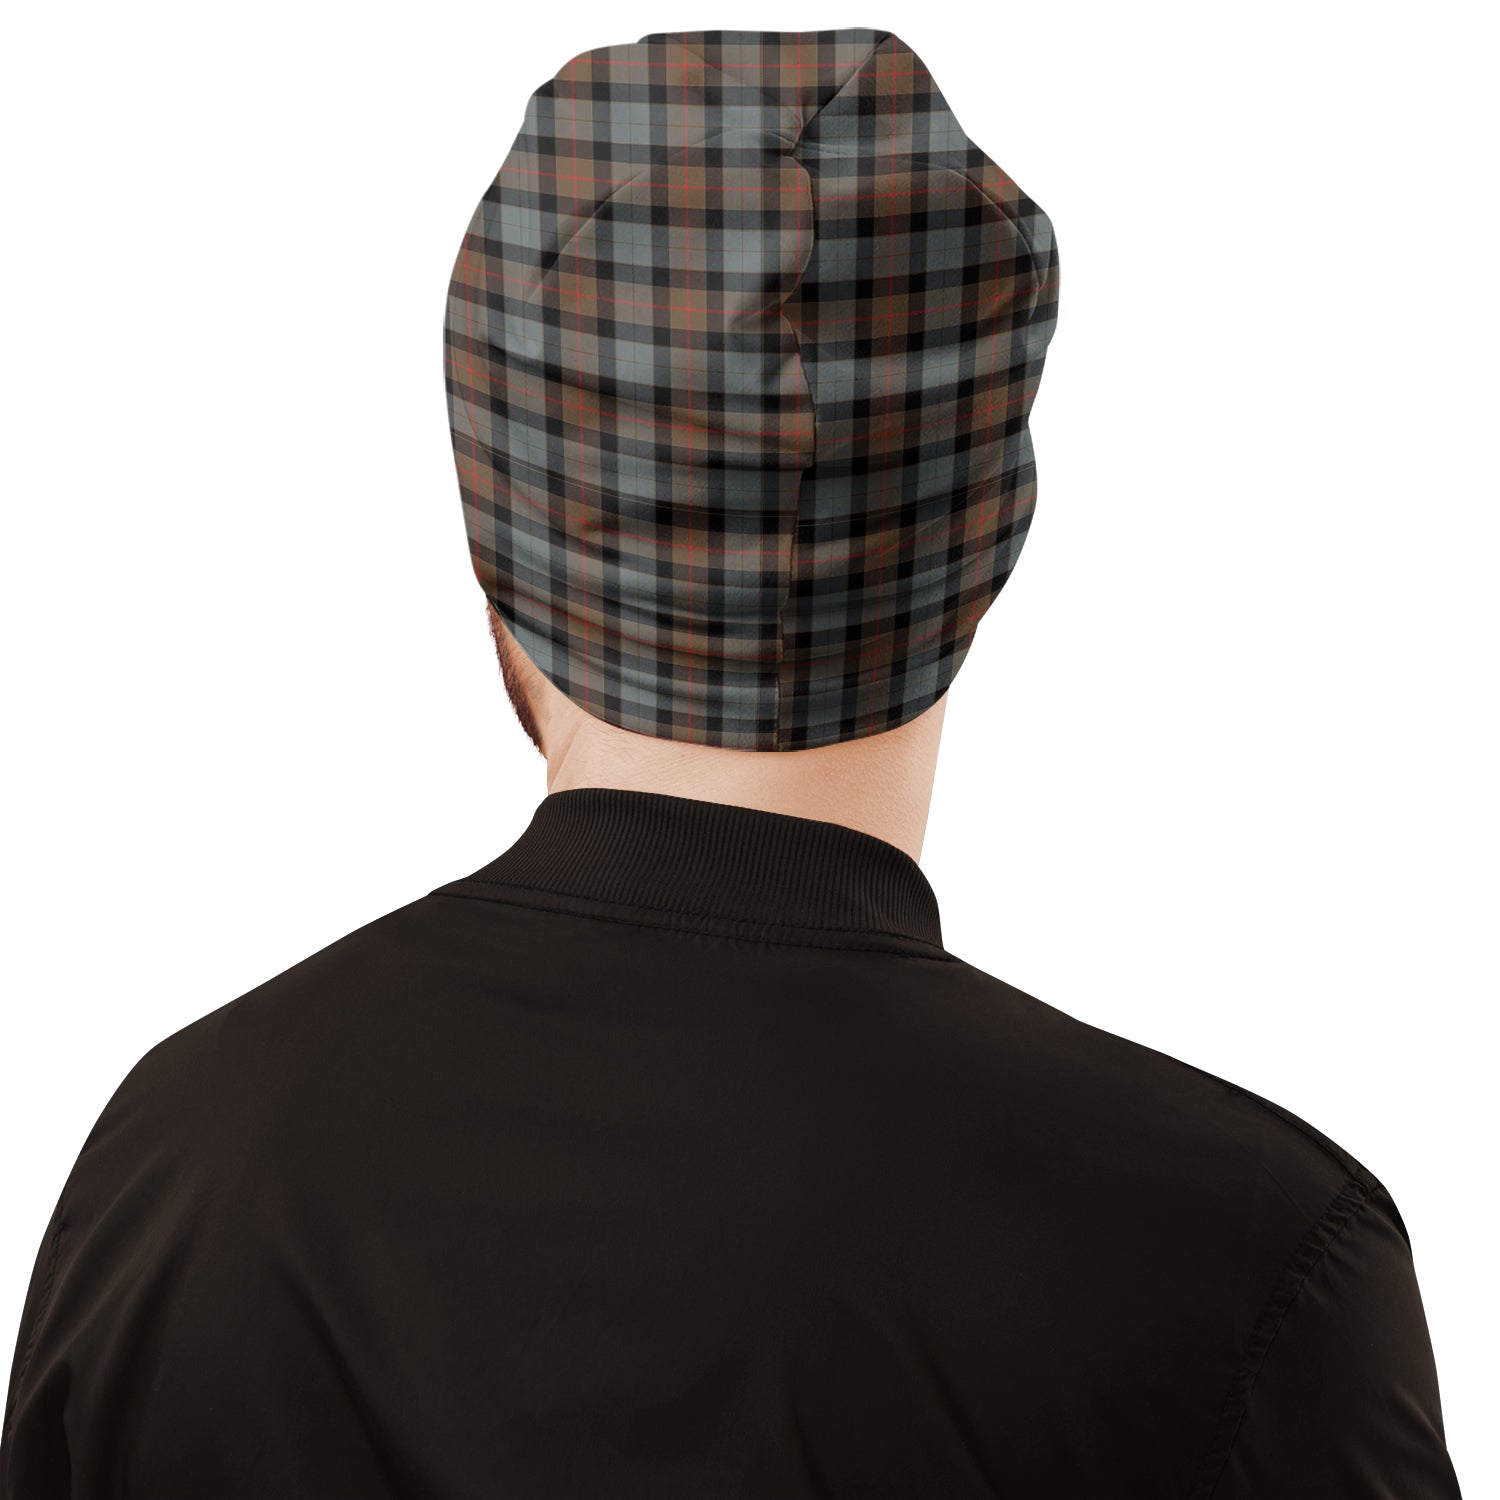 gunn-weathered-tartan-beanies-hat